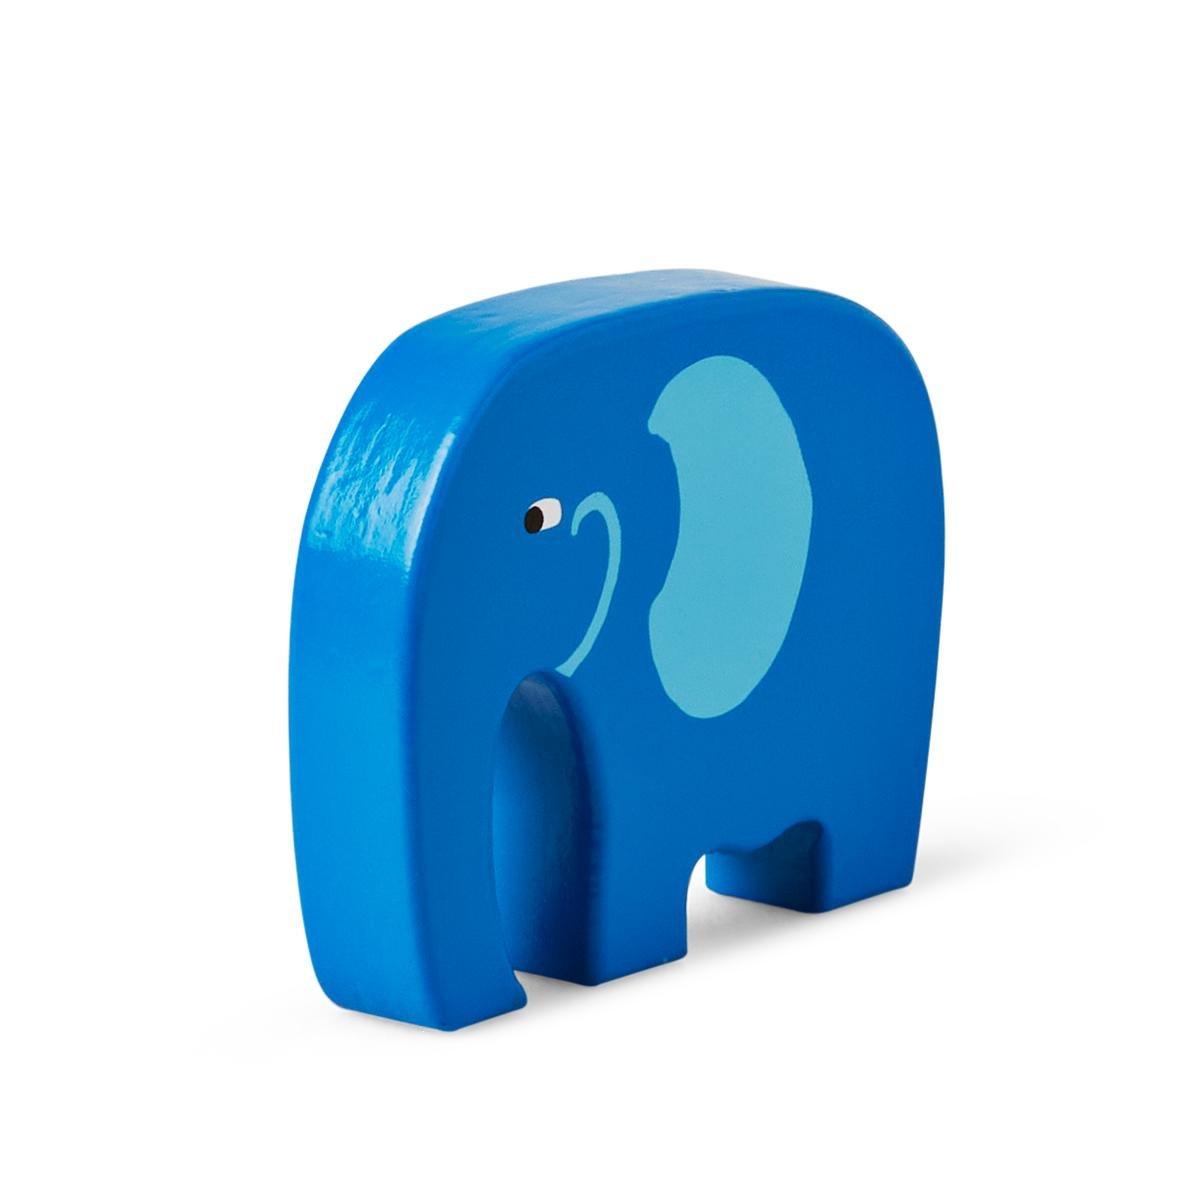 Blue elephant wooden animal